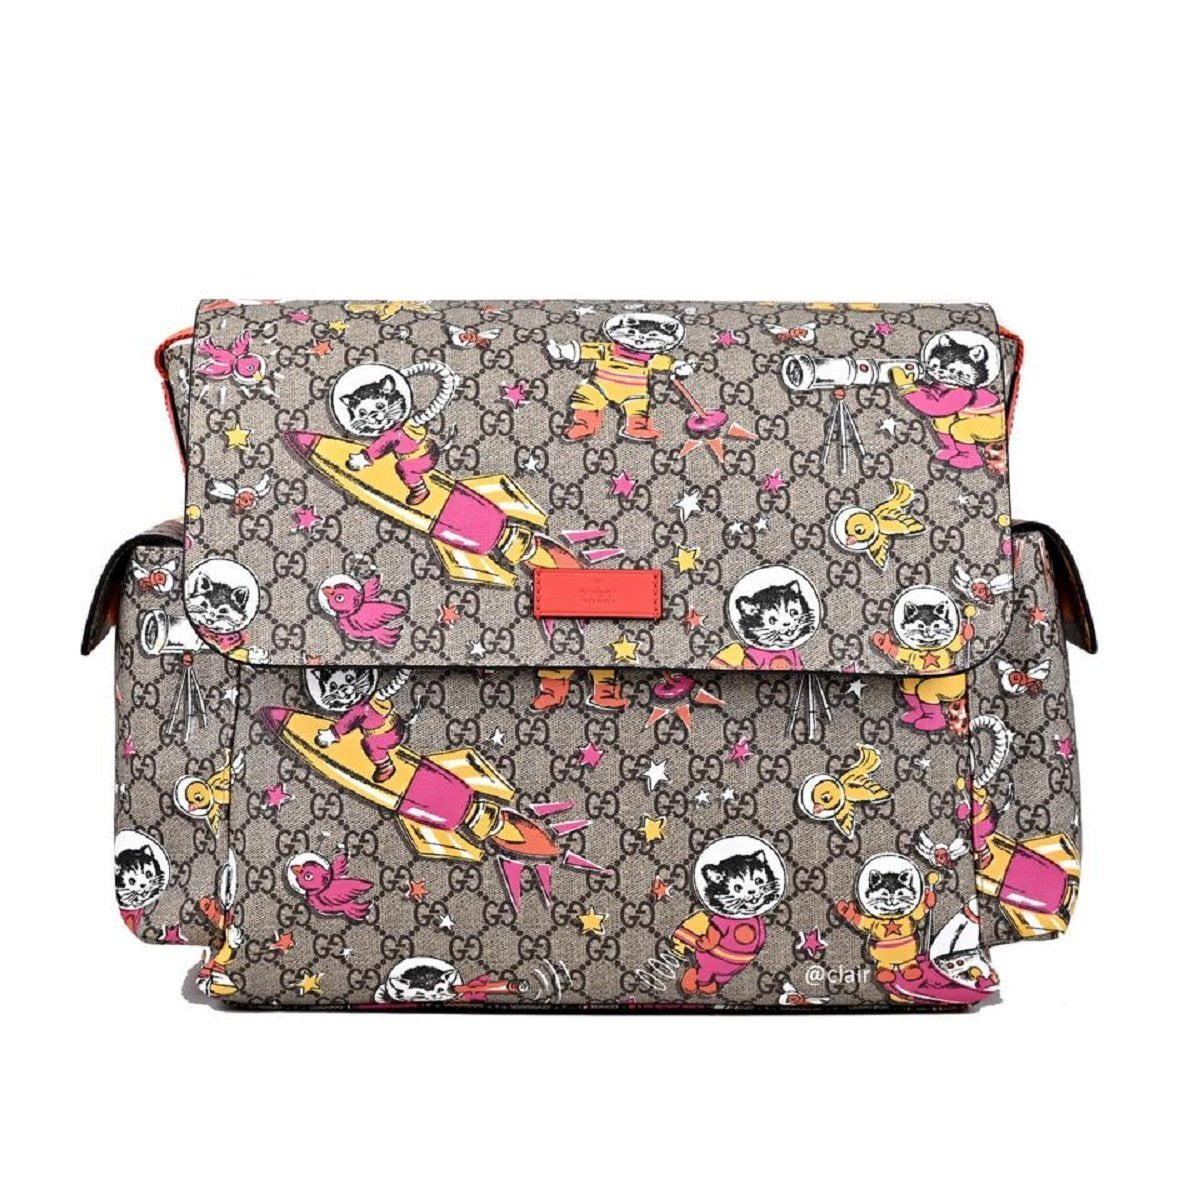 Gucci Space Cats Birds GG Supreme Canvas Diaper Bag Baby Beige 211131-204991 | eBay